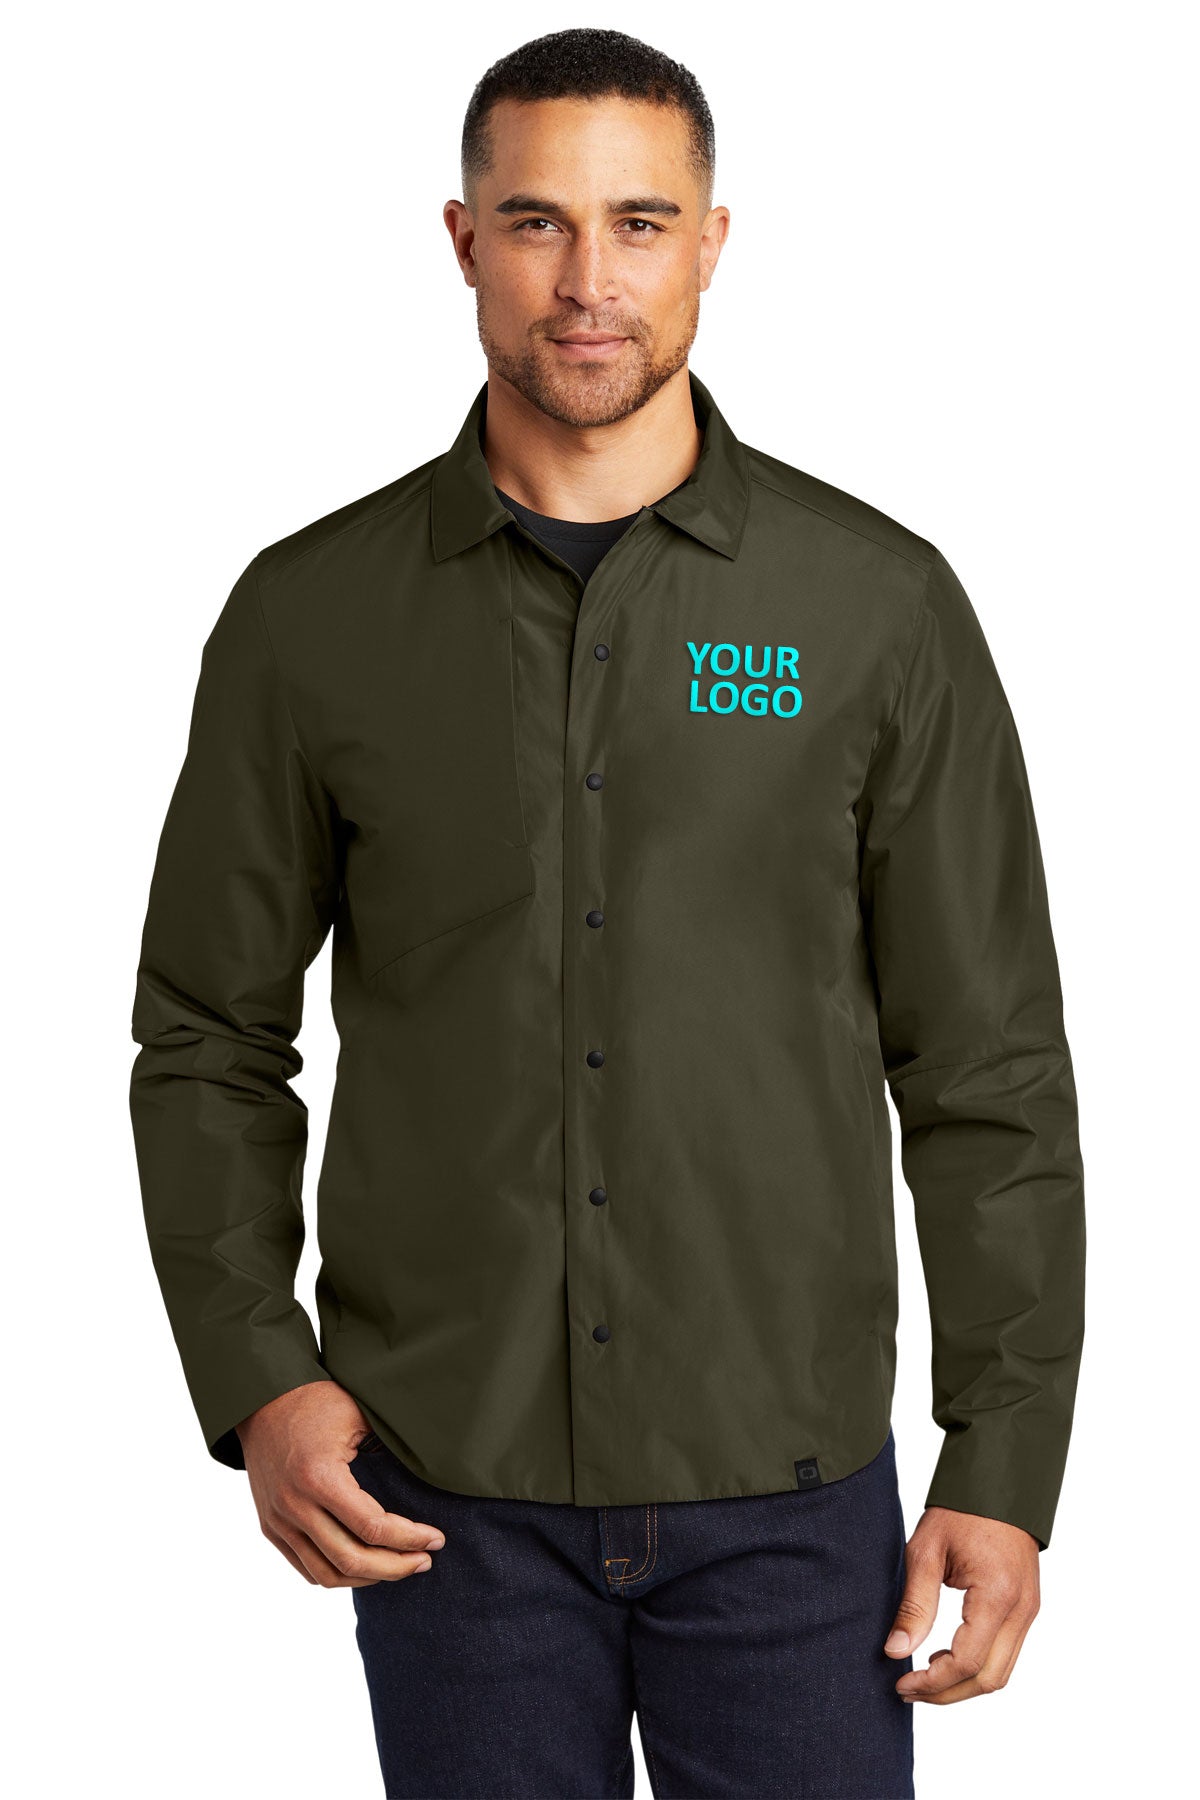 OGIO Drive Green OG754 jackets with company logo